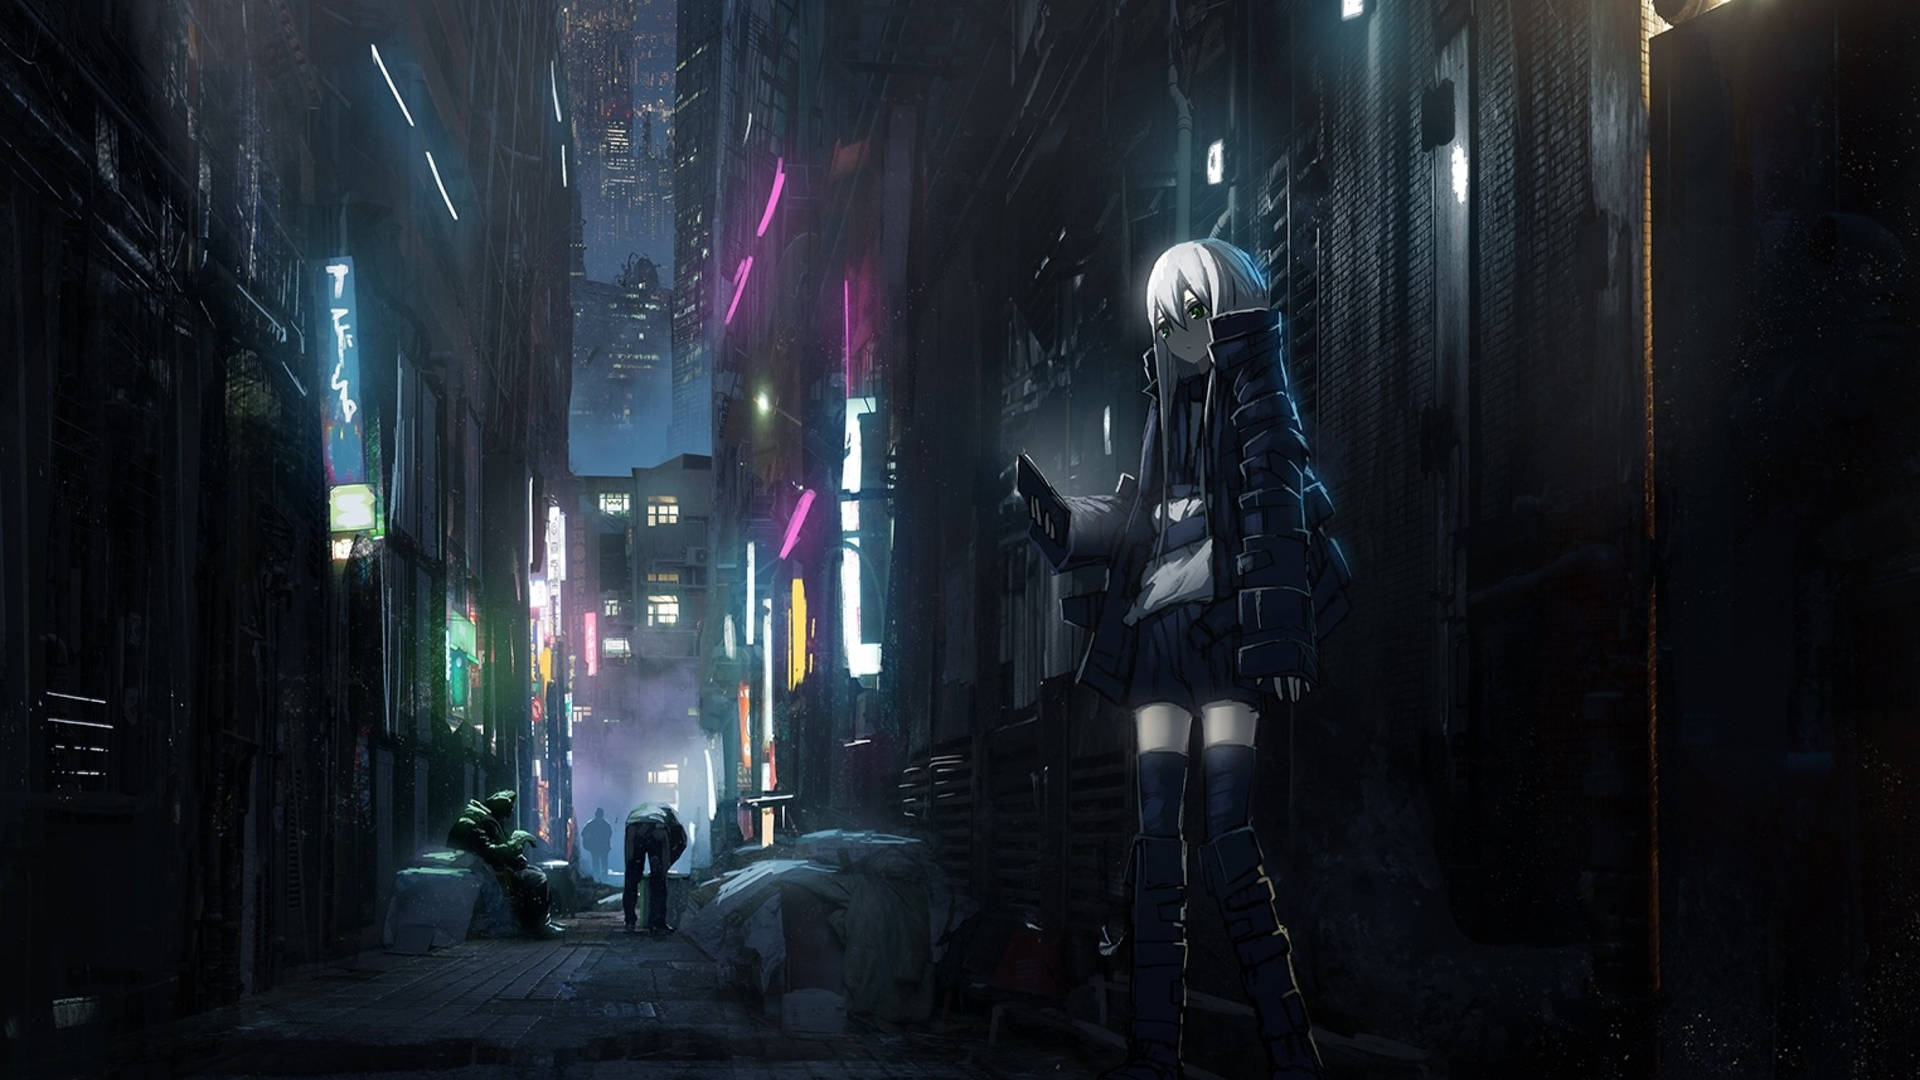 Mystical Anime Dark Cityscape Background